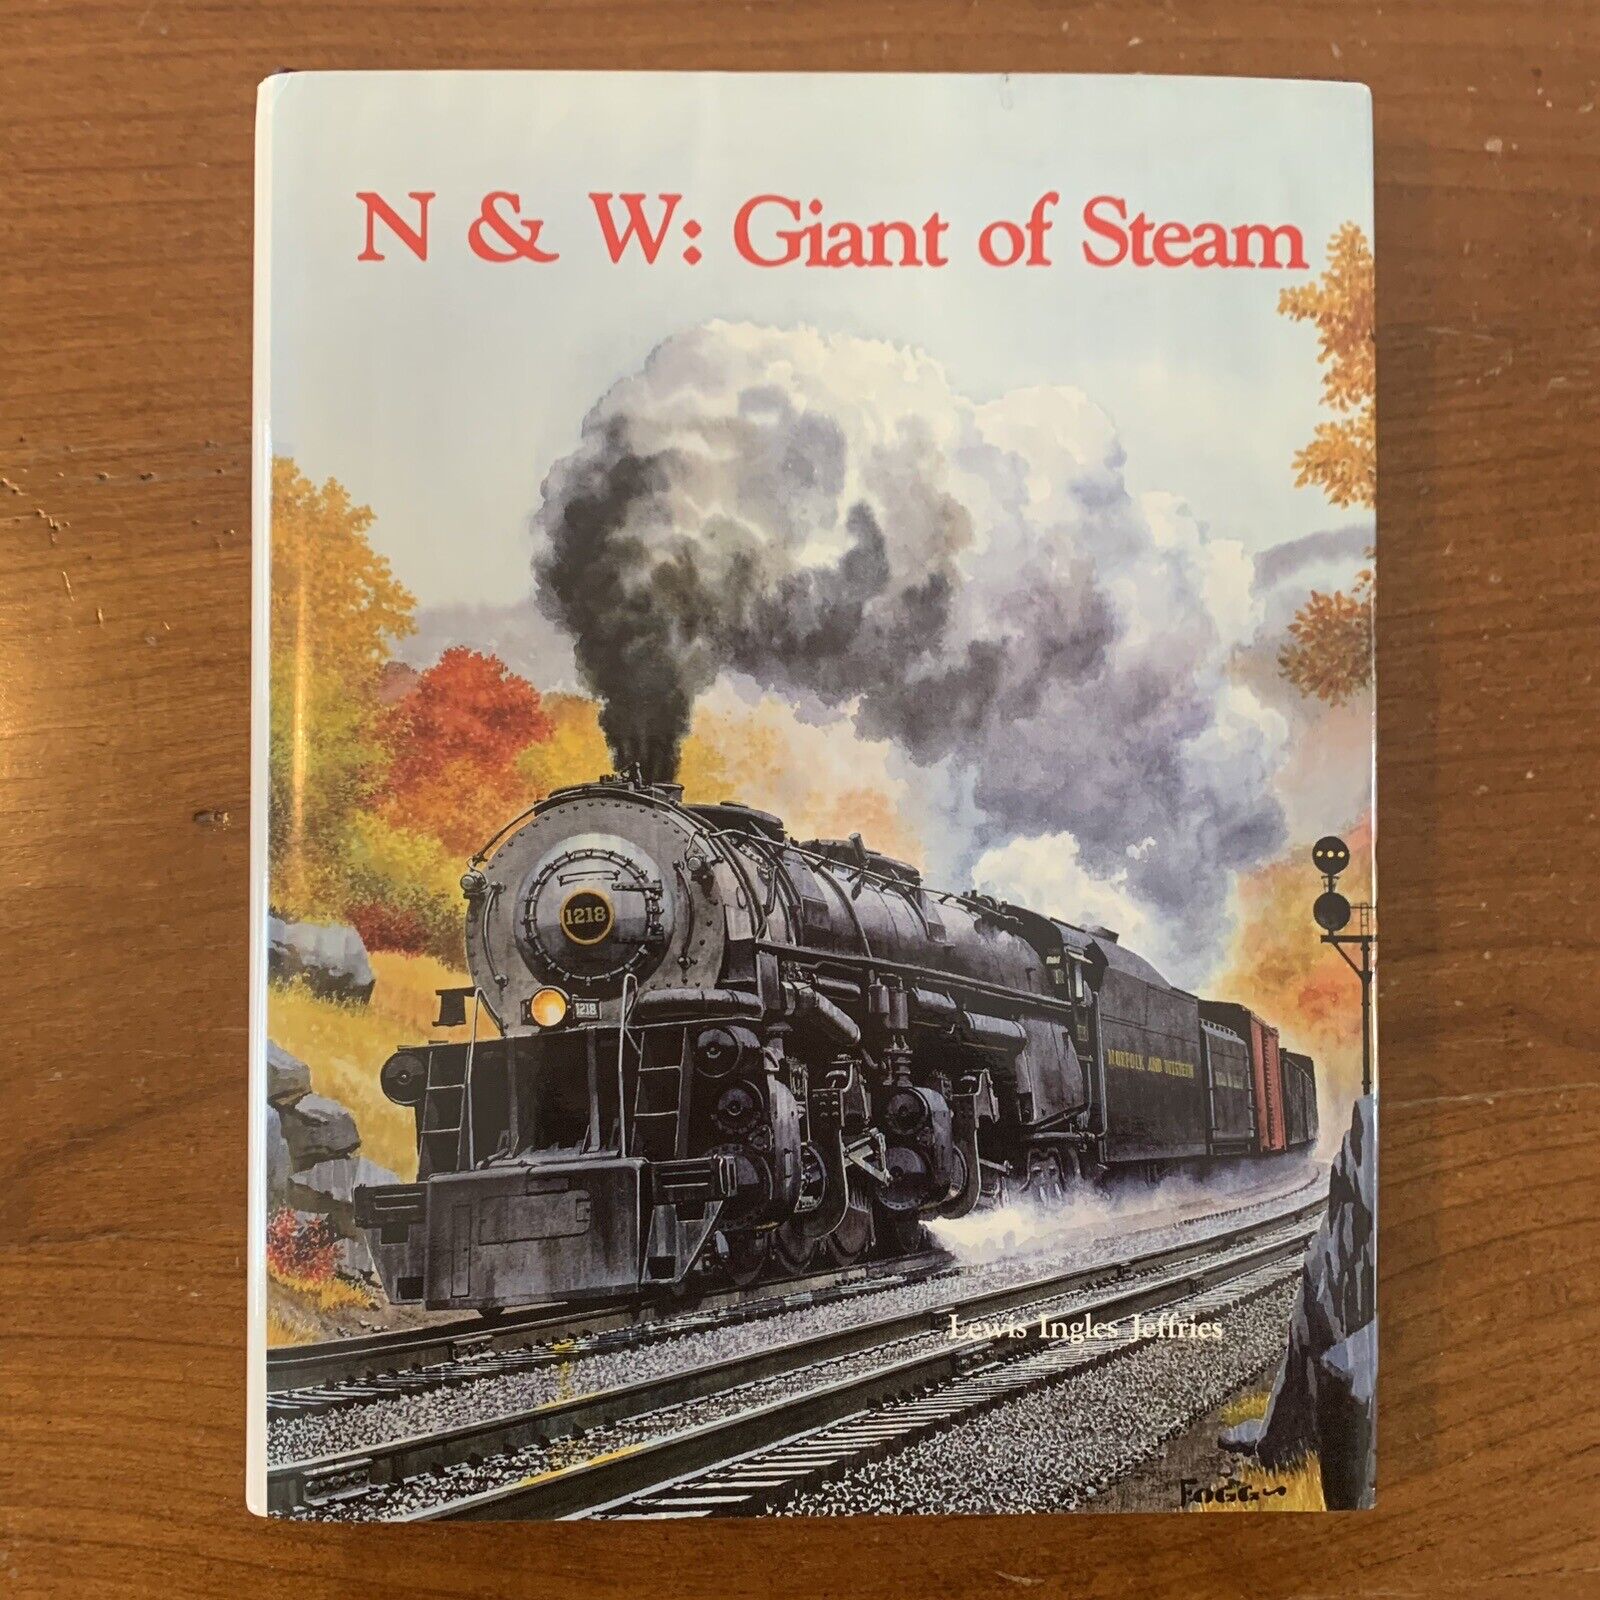 N&W: Giant of Steam - Major Lewis Ingalls Jeffries HC DJ 331pp. First ed., 1980